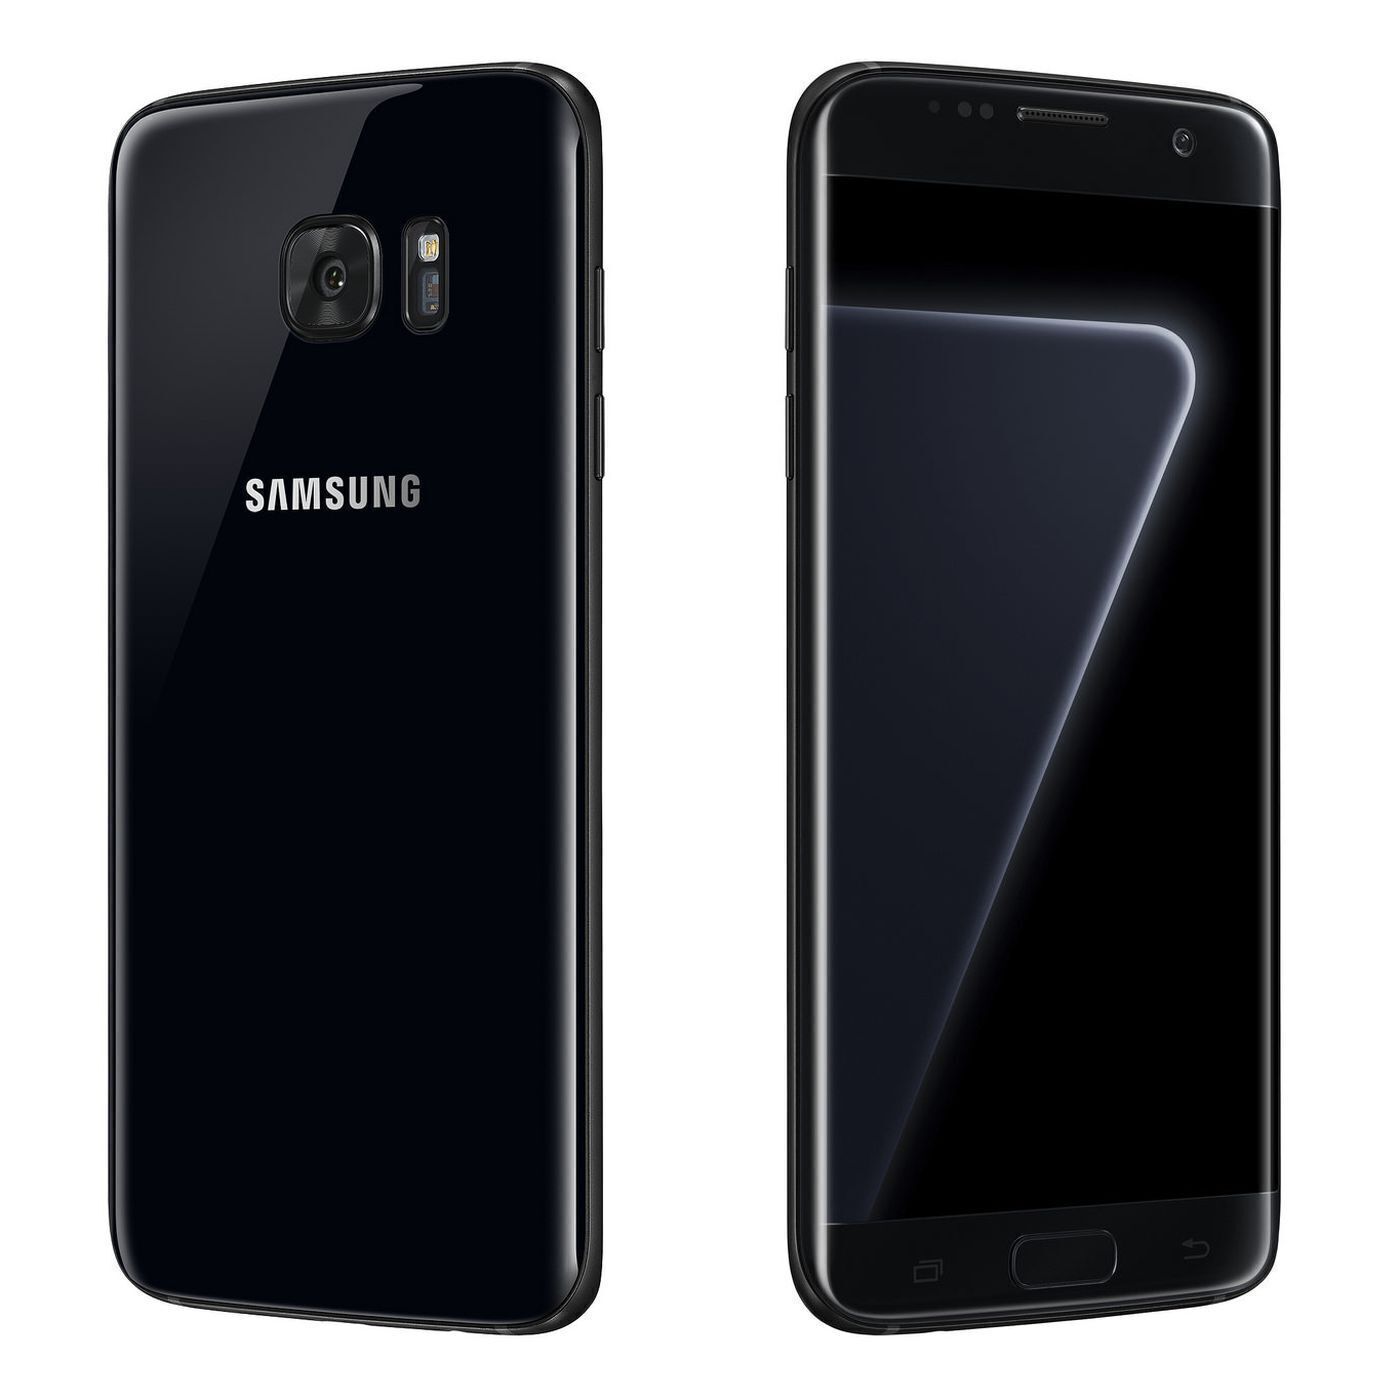 Samsung Galaxy S7 Edge 32GB Black (G935) - Good Condition (Refurbished)